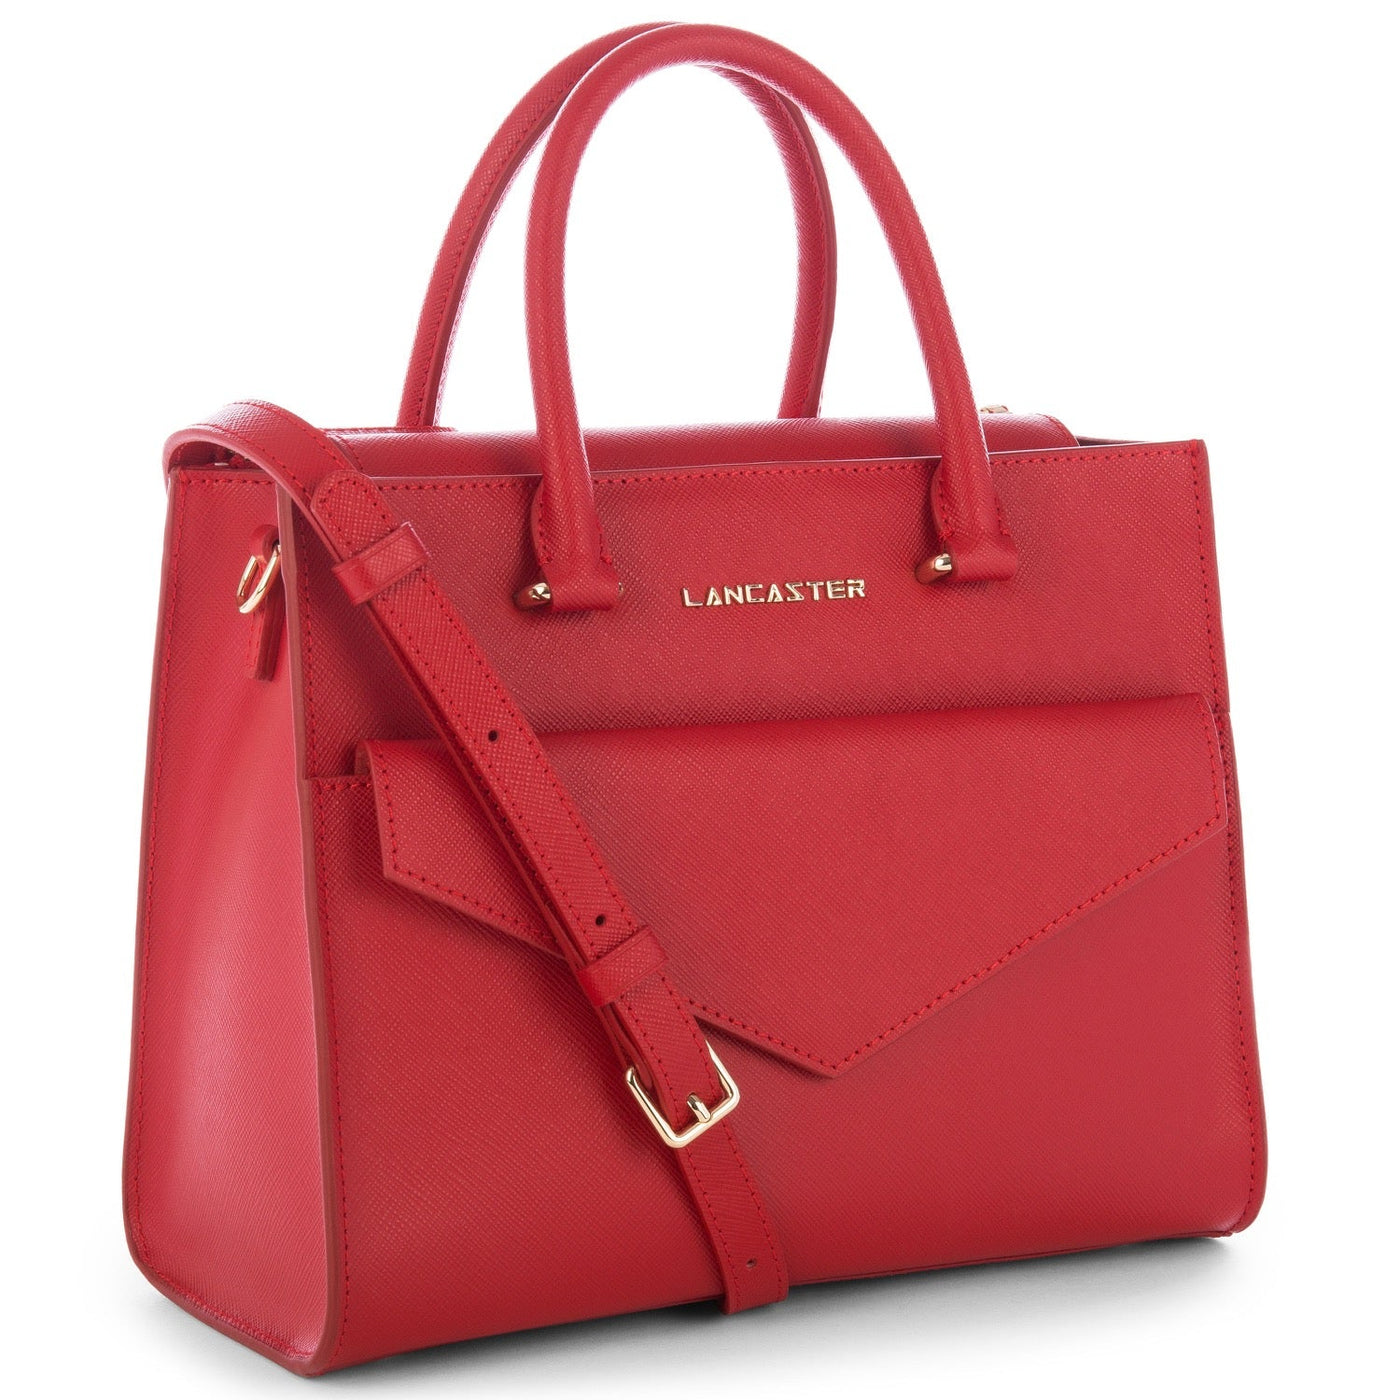 handbag - saffiano signature #couleur_rouge